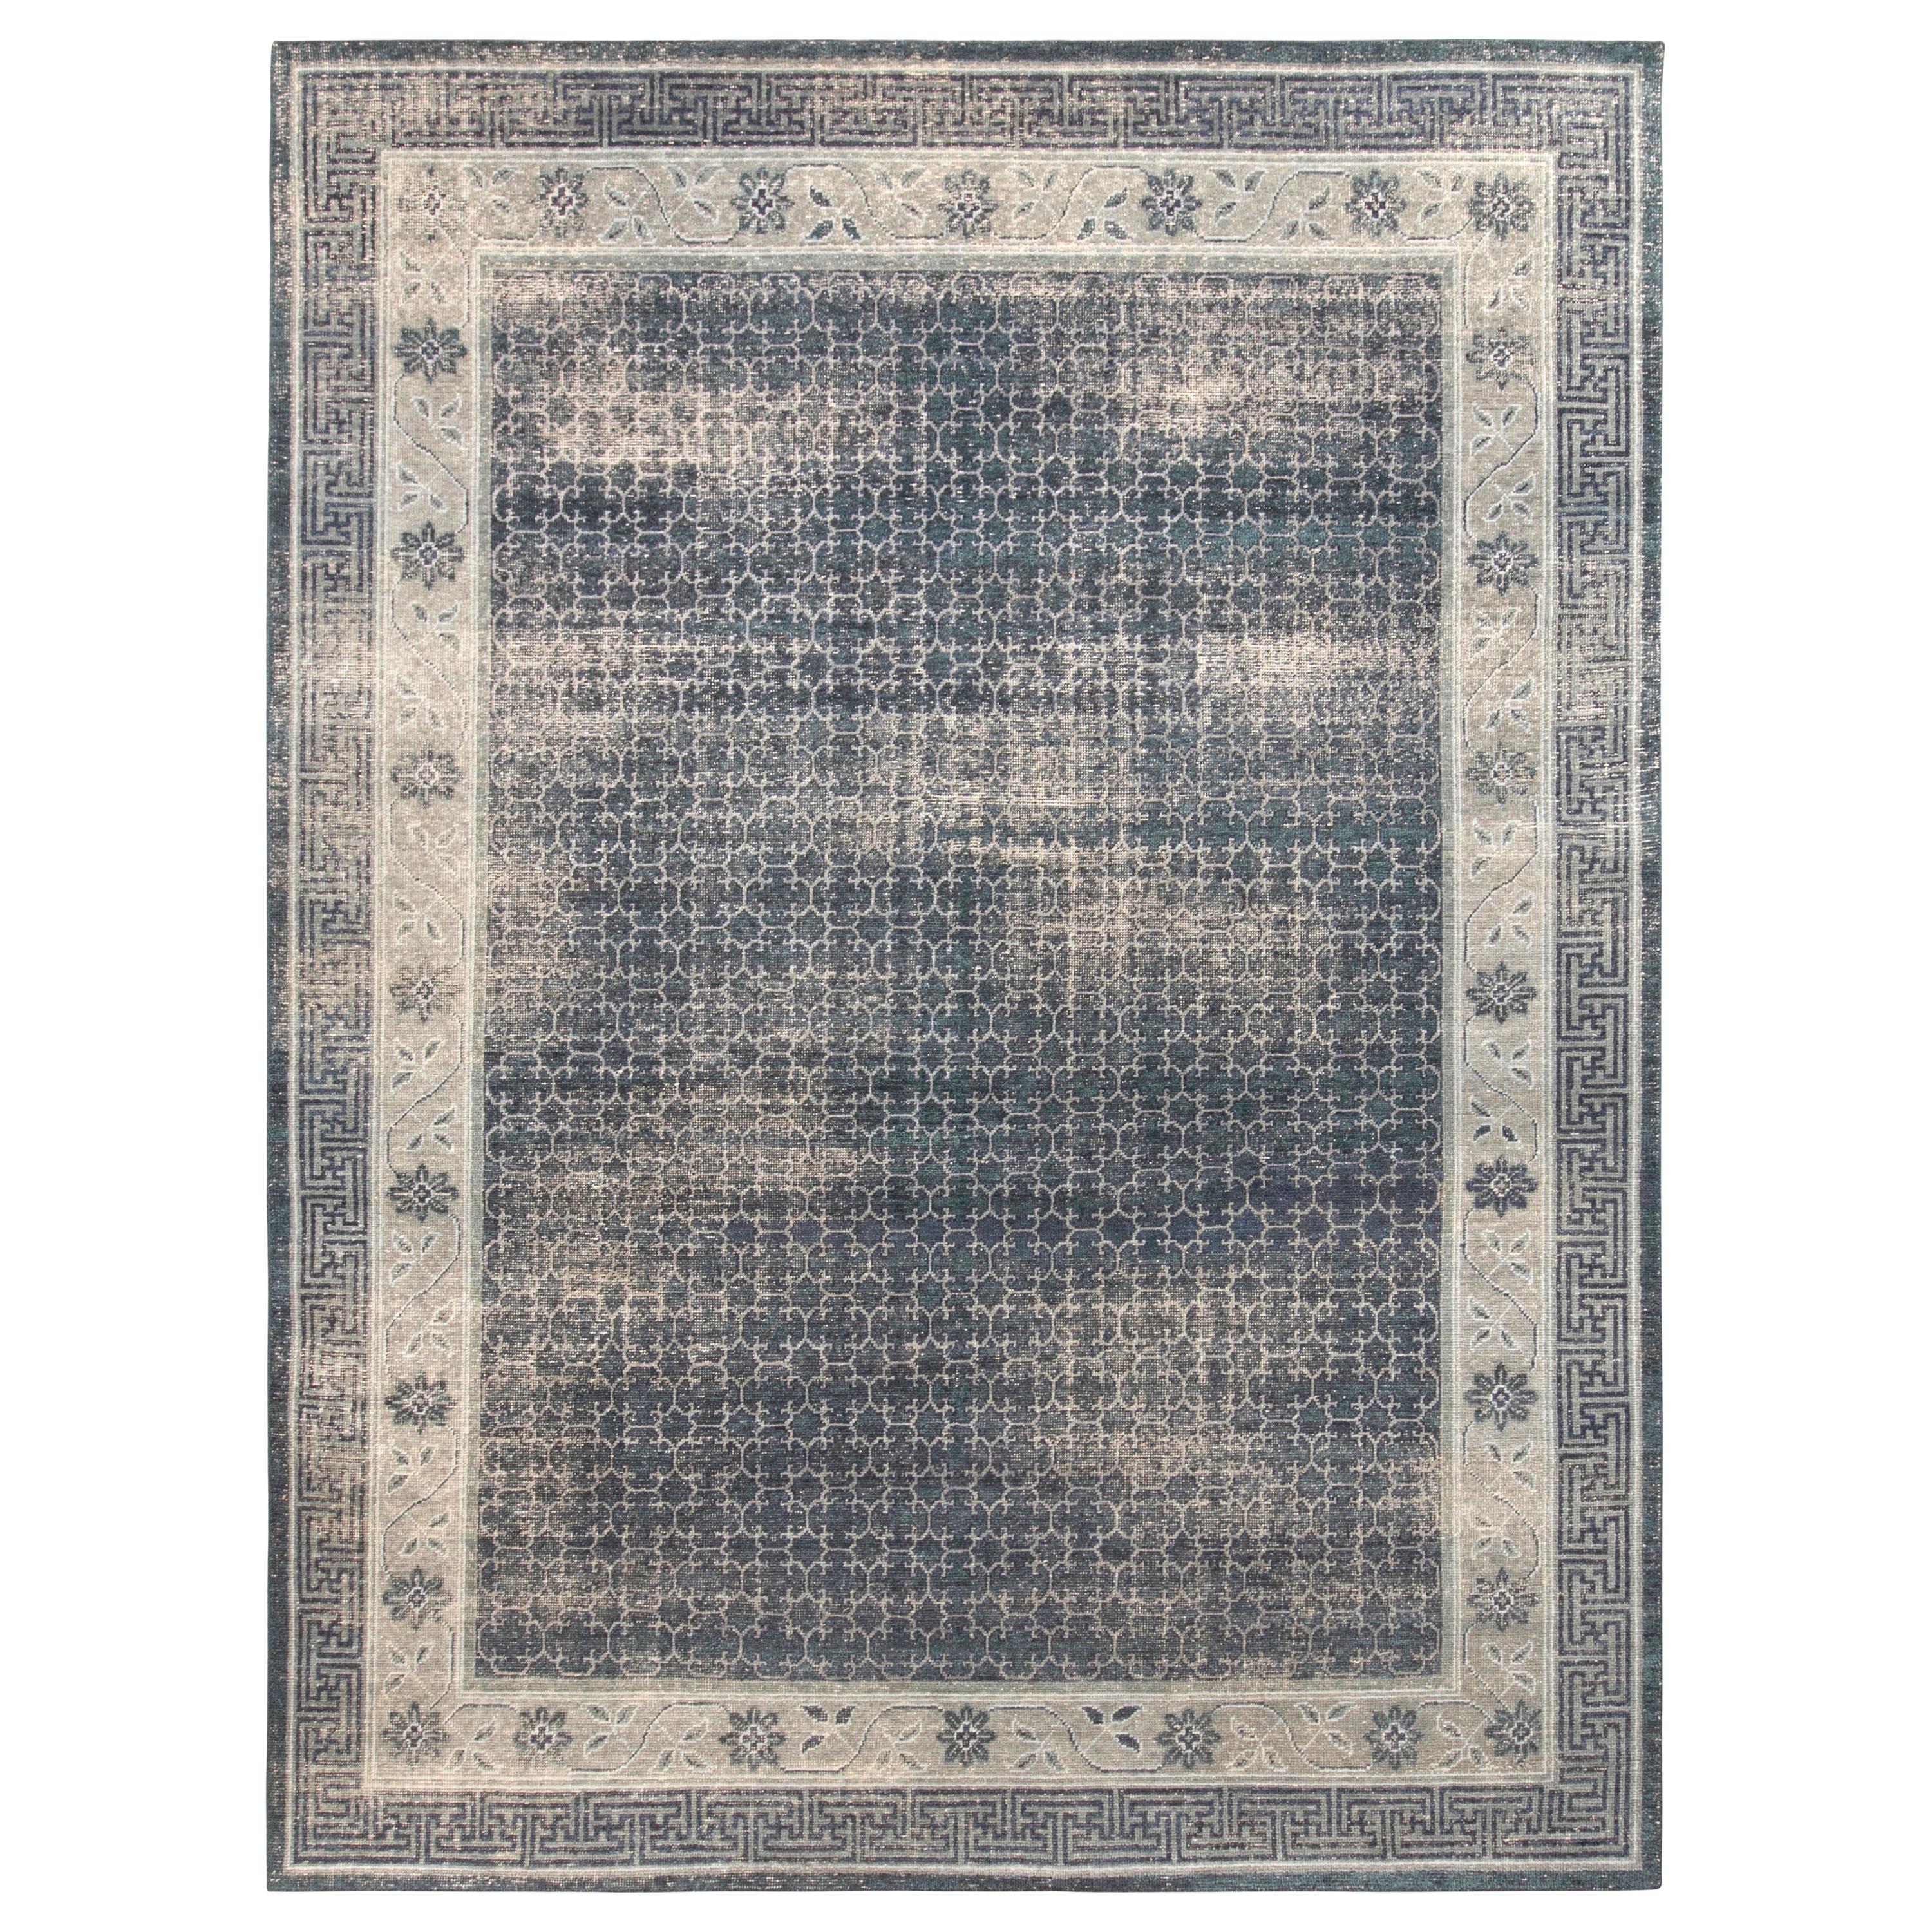 Teppich & Kilims Distressed im Khotan-Stil in Blau, Grau mit geometrischem Muster